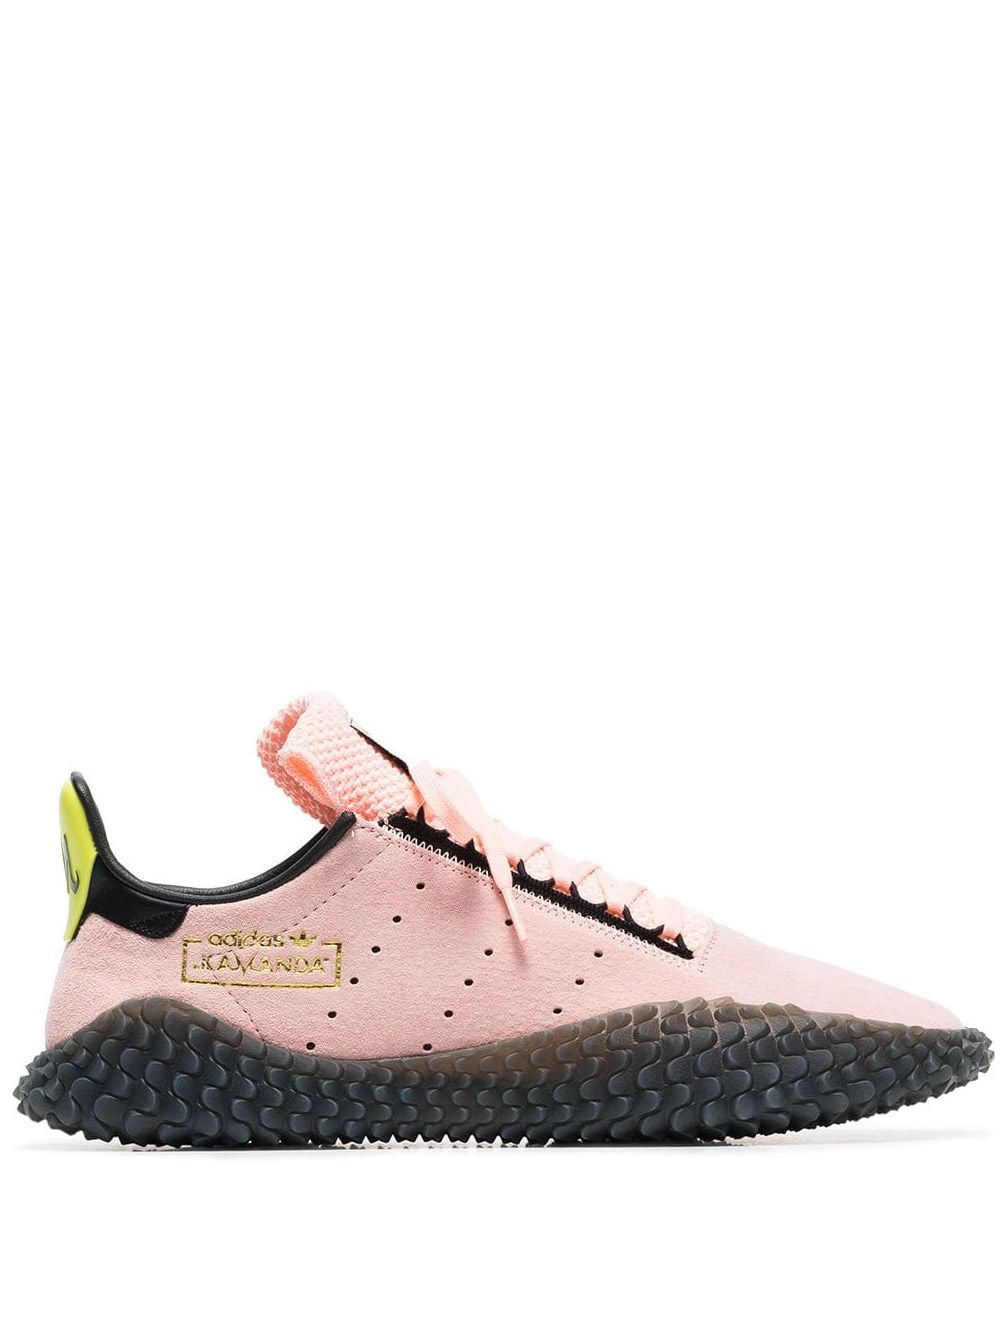 adidas x Dragon Ball Z Kamanda "Majin Buu" sneakers - Pink von adidas